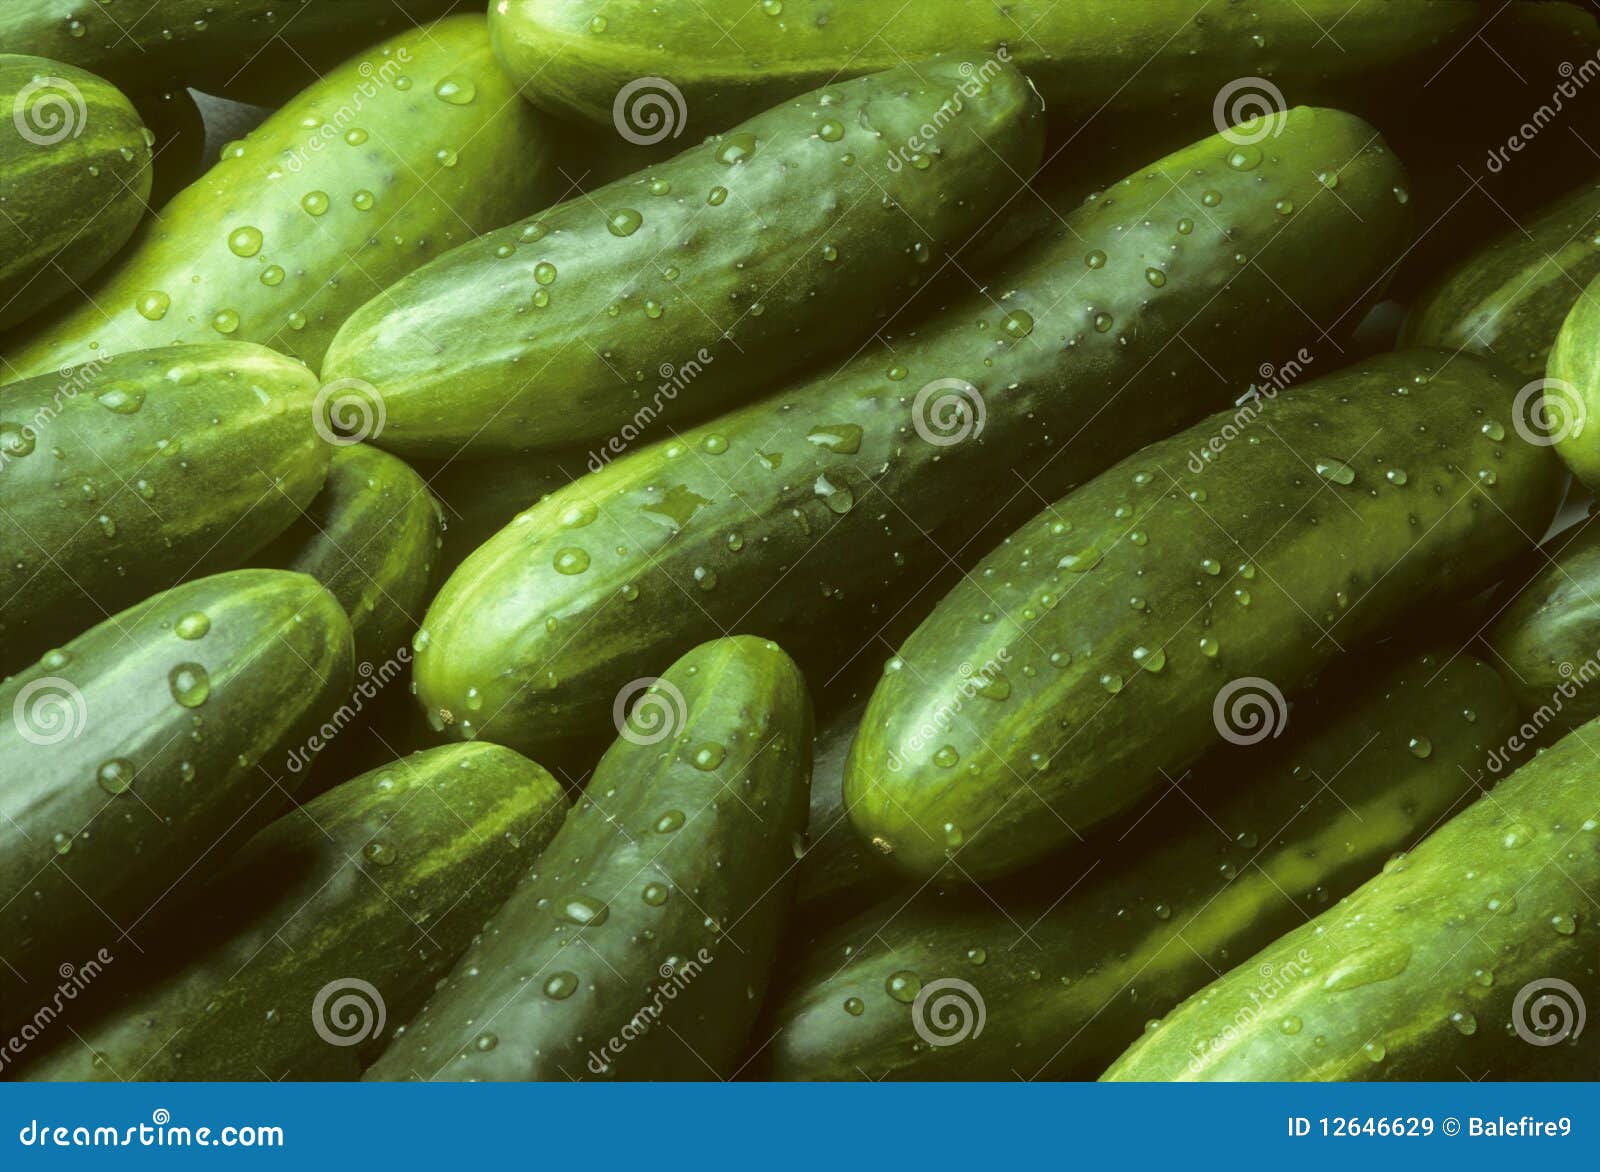 pile of fresh cucumbers lying diagonally